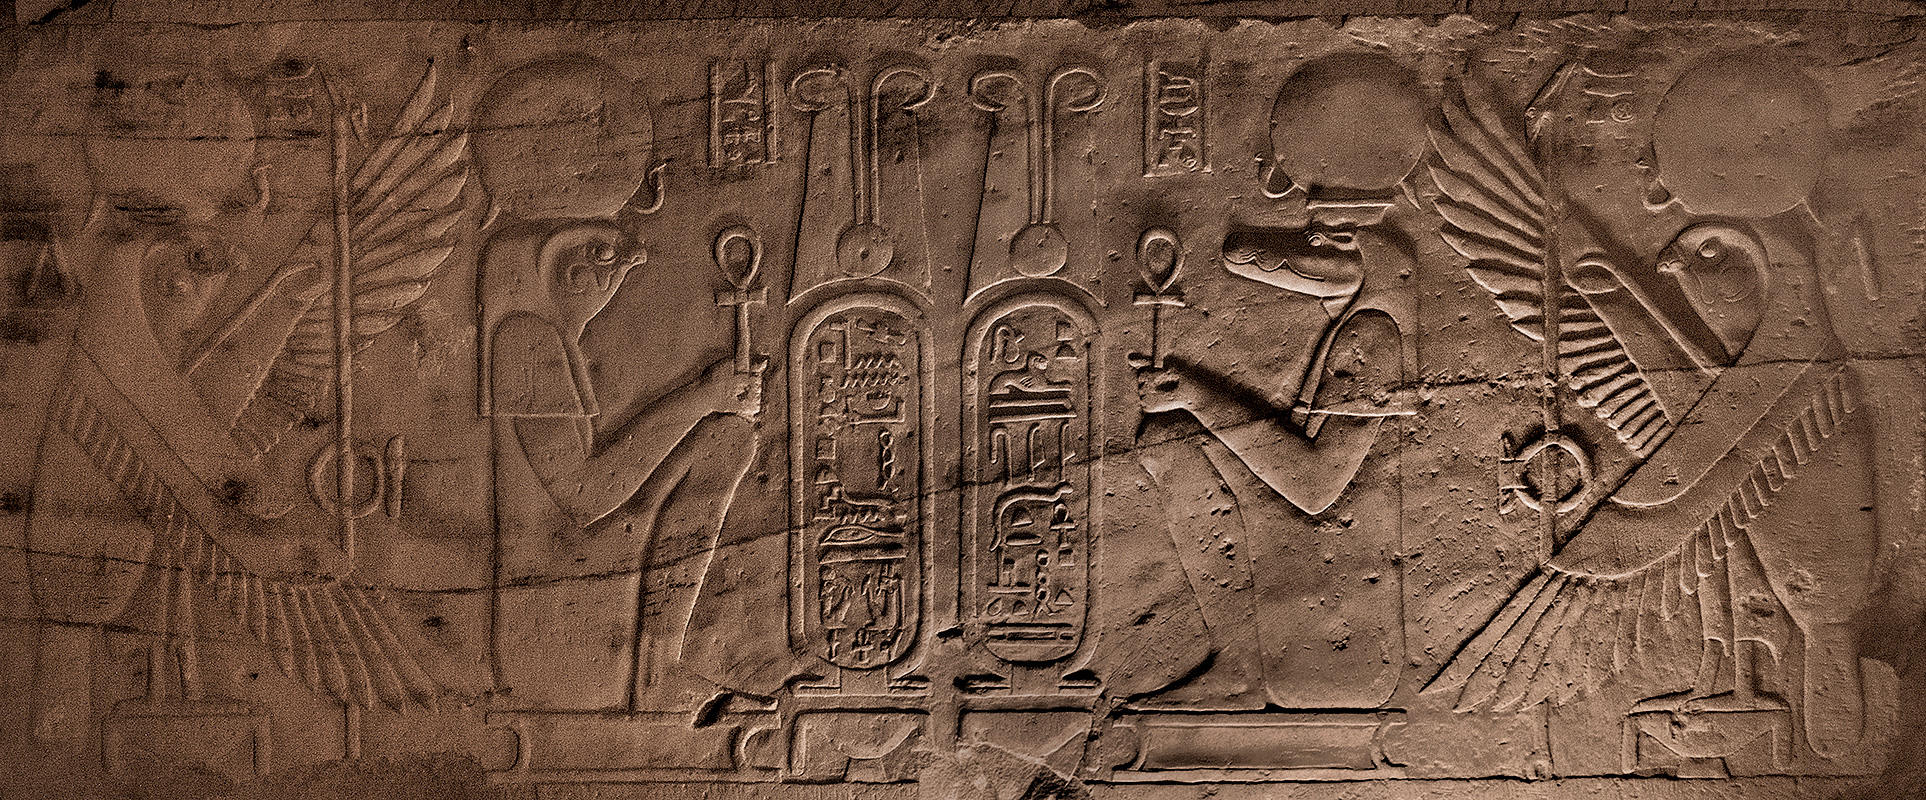 Protectors Sobek and Horus